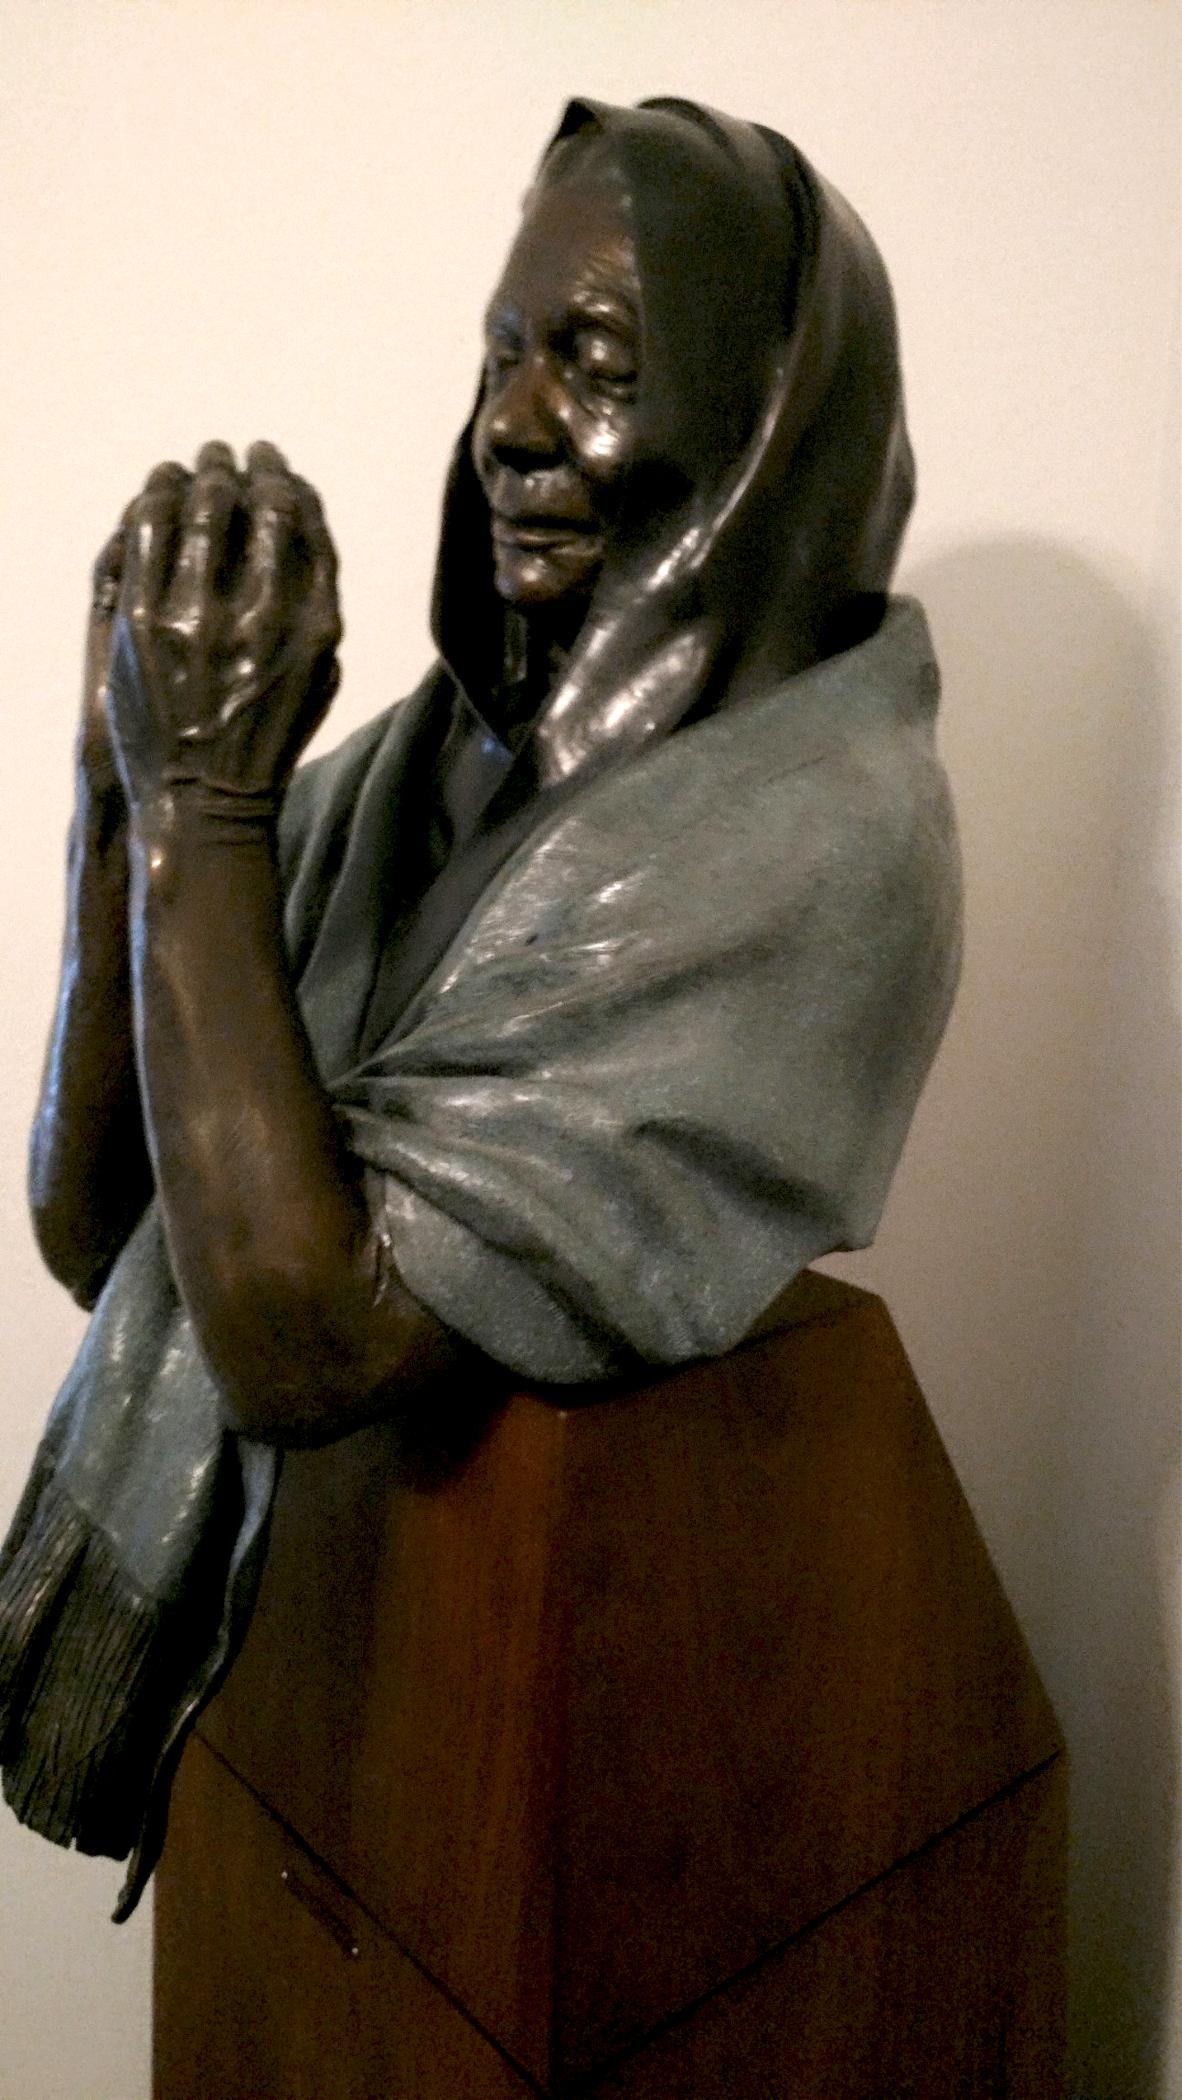 Trail of Prayers by Denny Haskew
Figurative Female Bust on custom pedestal 66x16x20